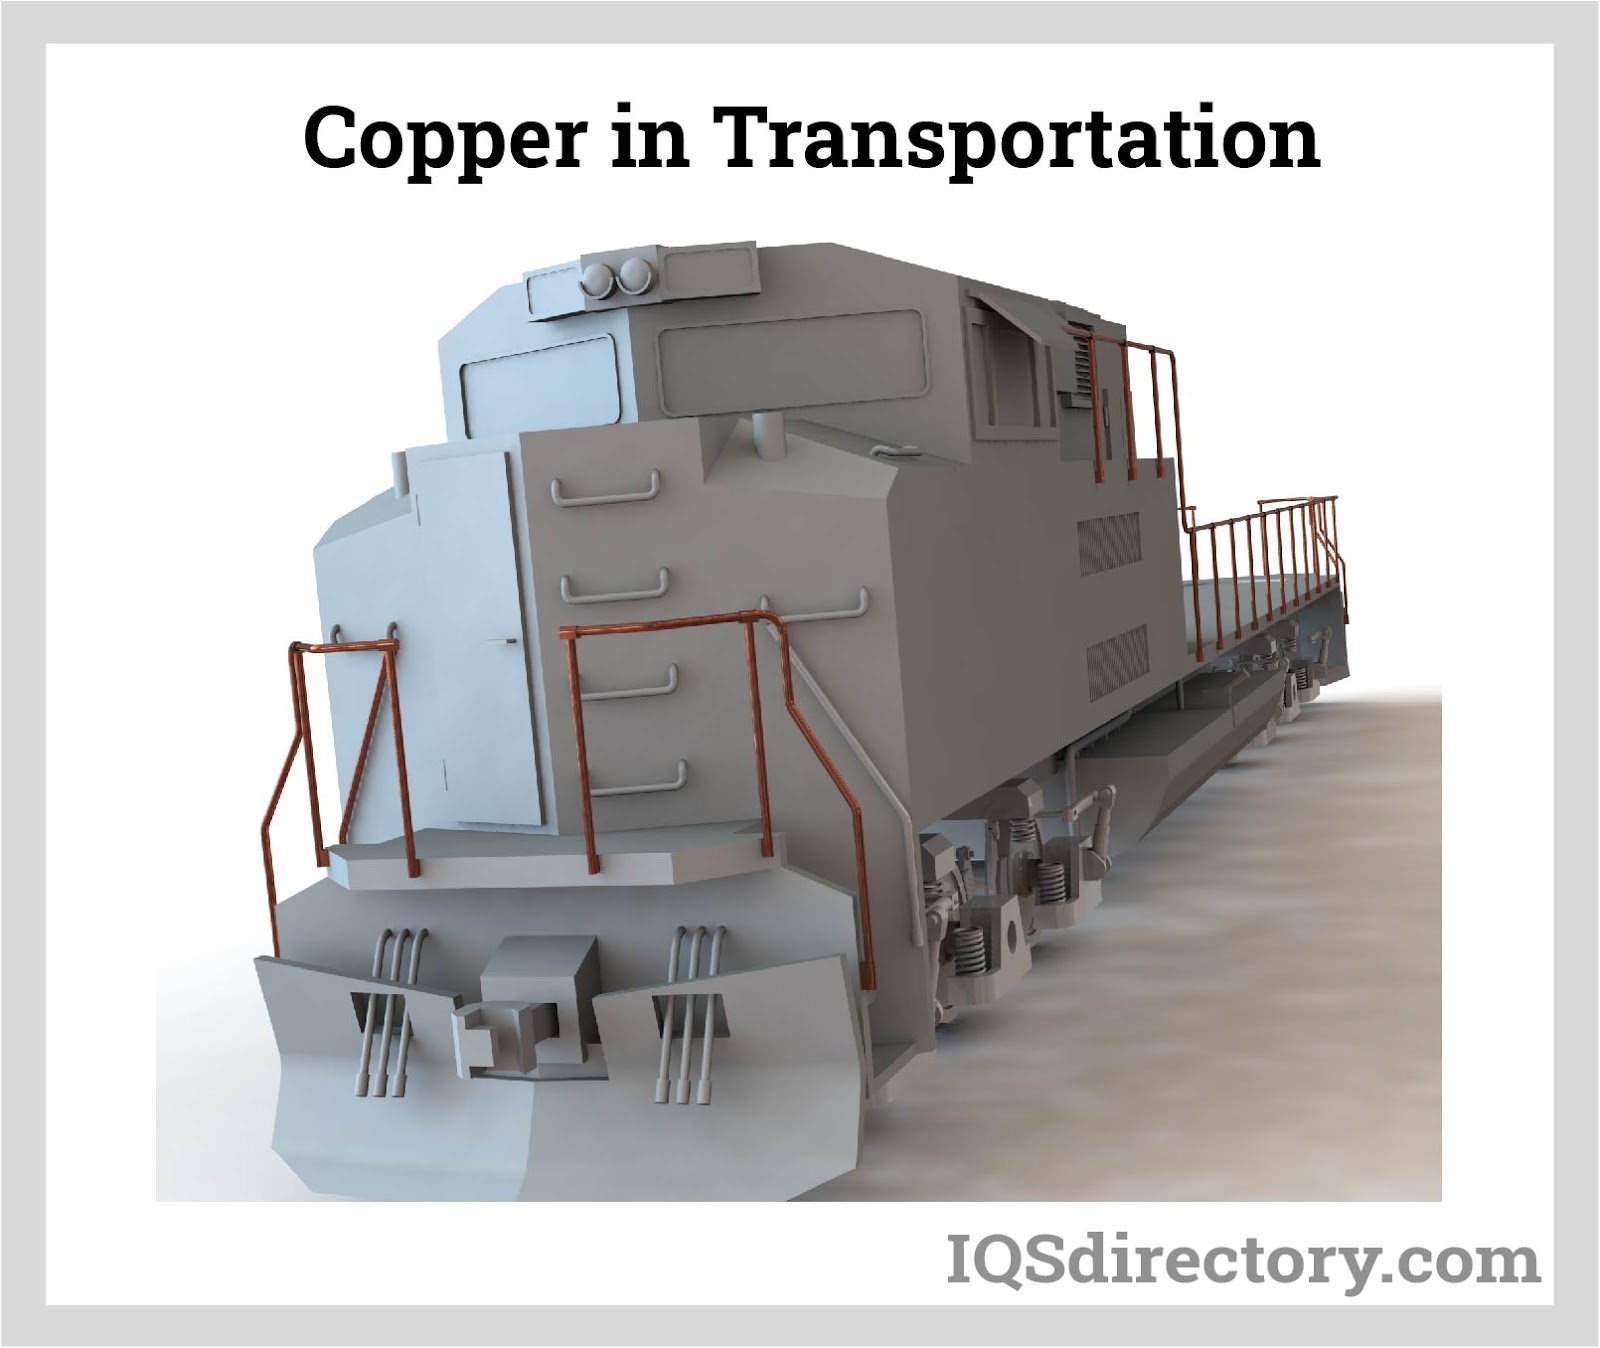 Copper in Transportation